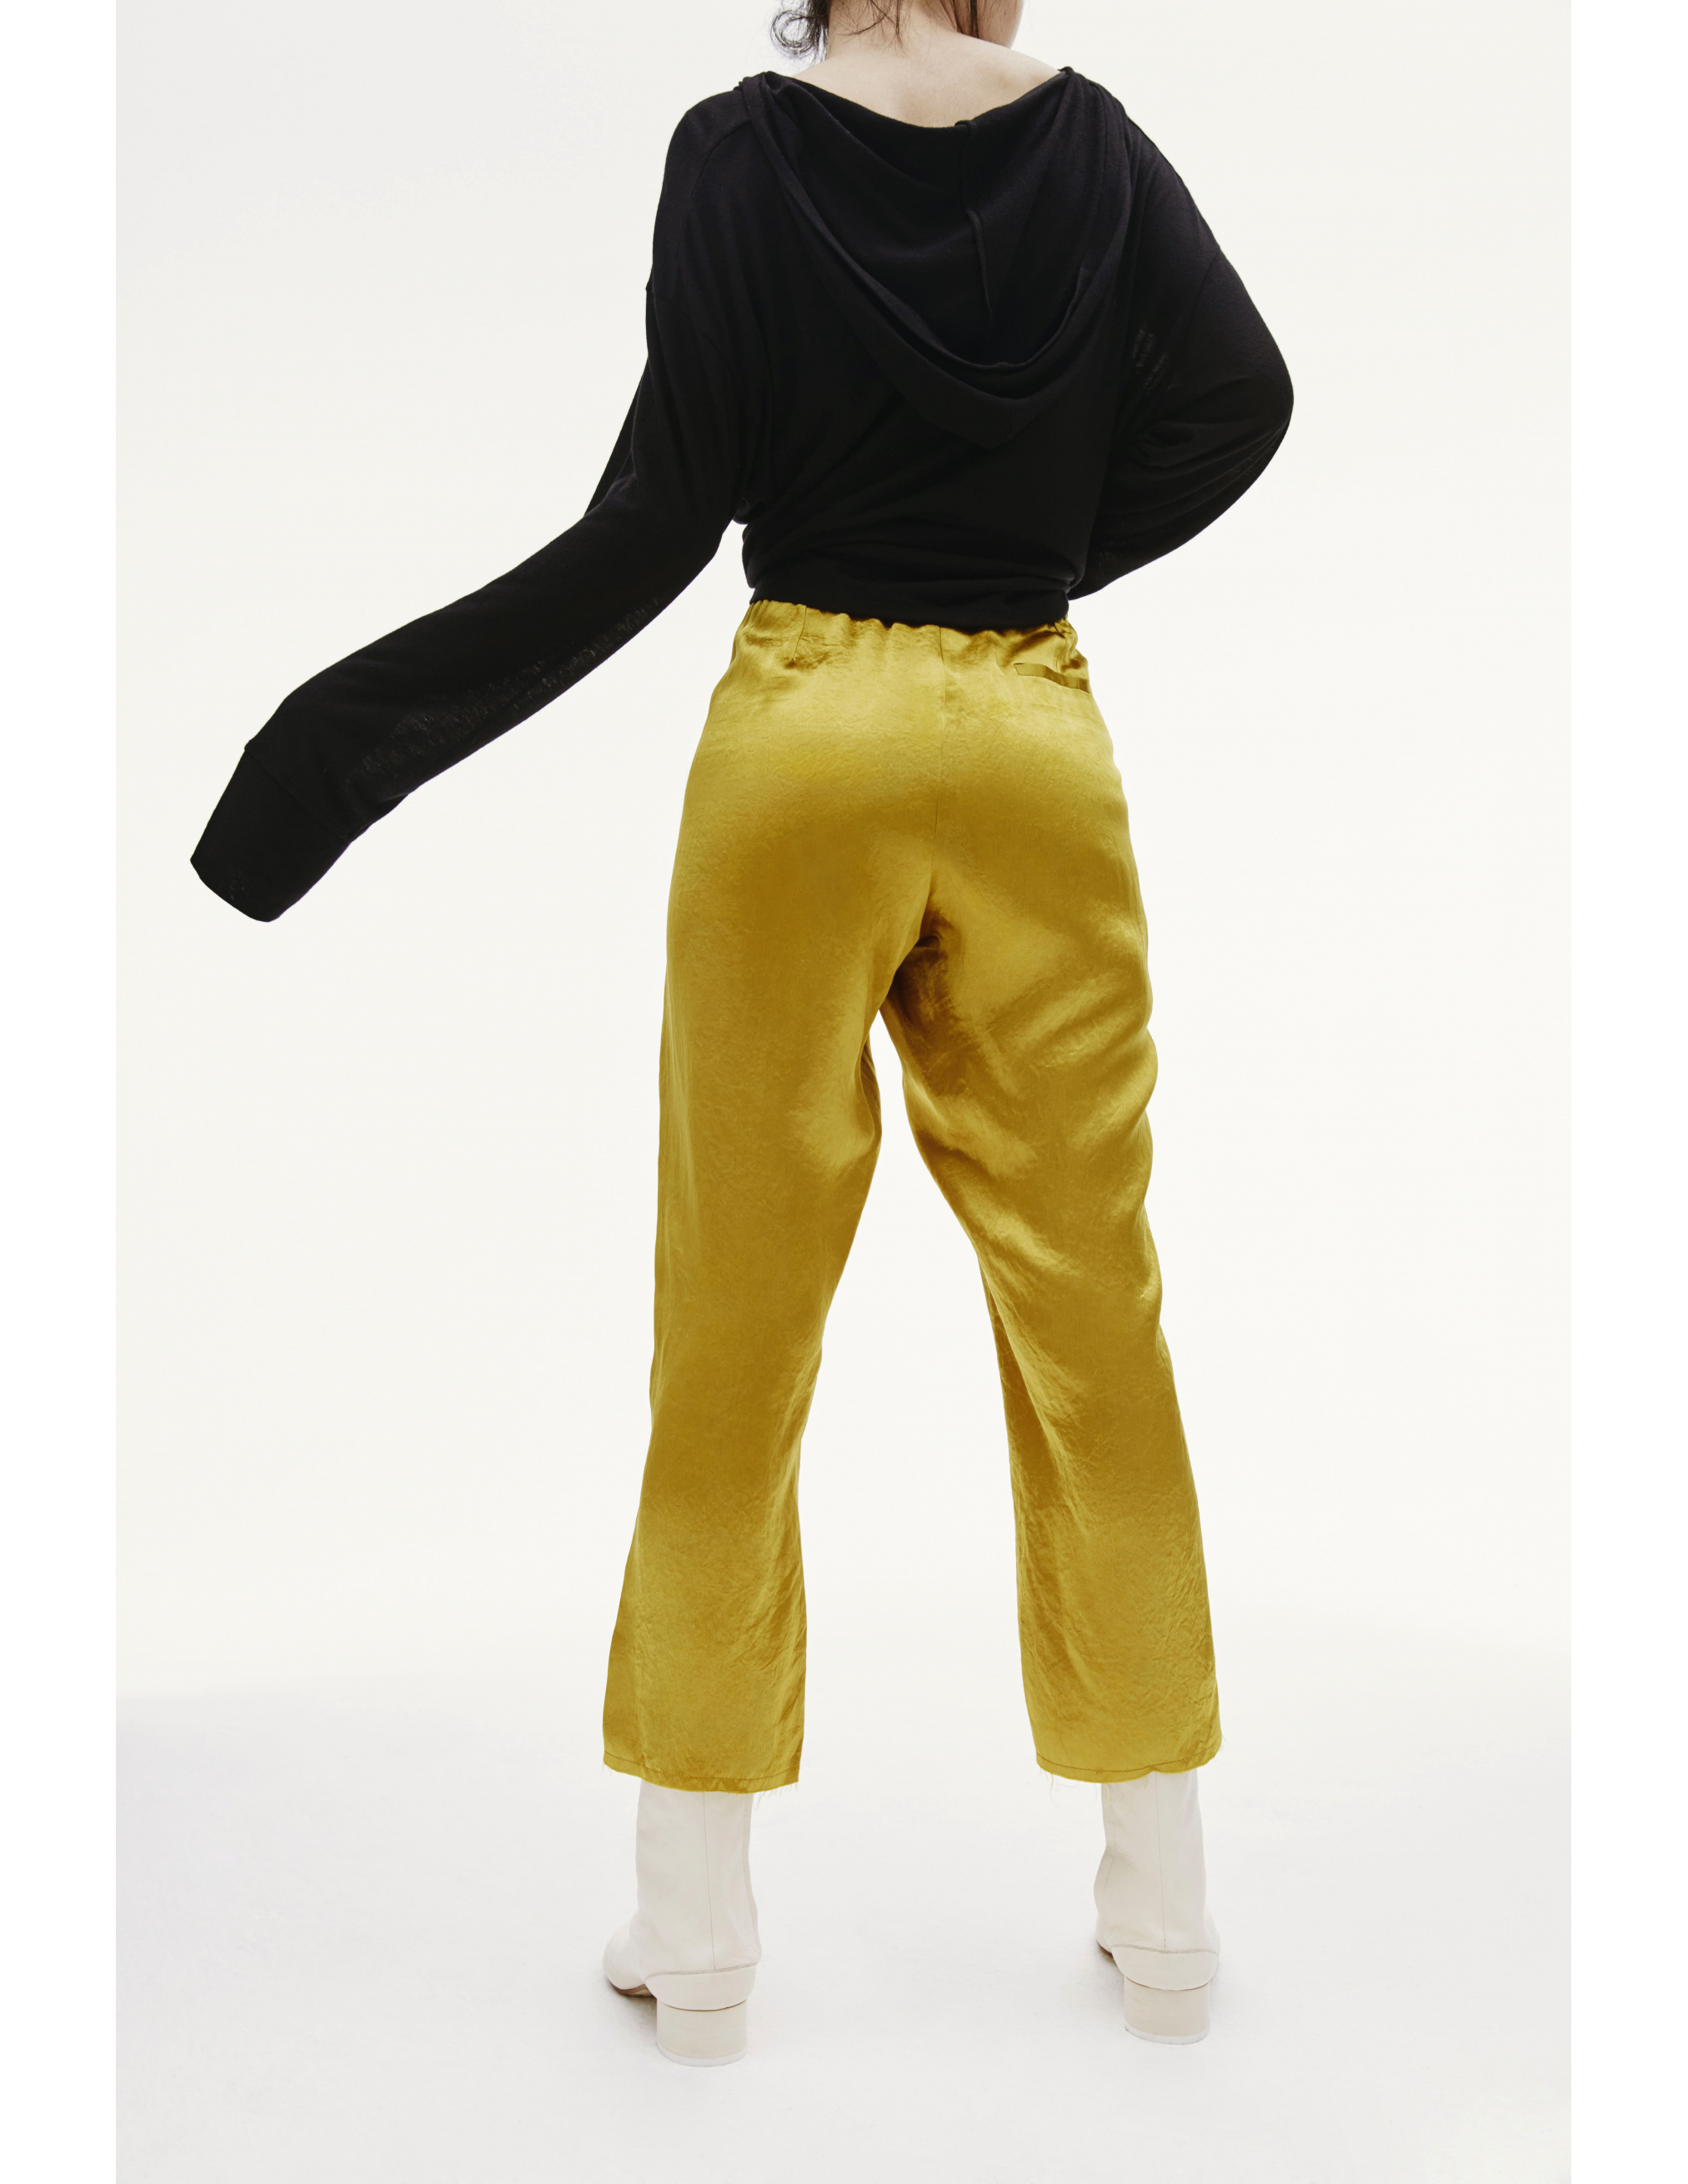 Золотистые укороченные брюки Ann Demeulemeester 1902-1406-P-126-018, размер 38;40 - фото 3